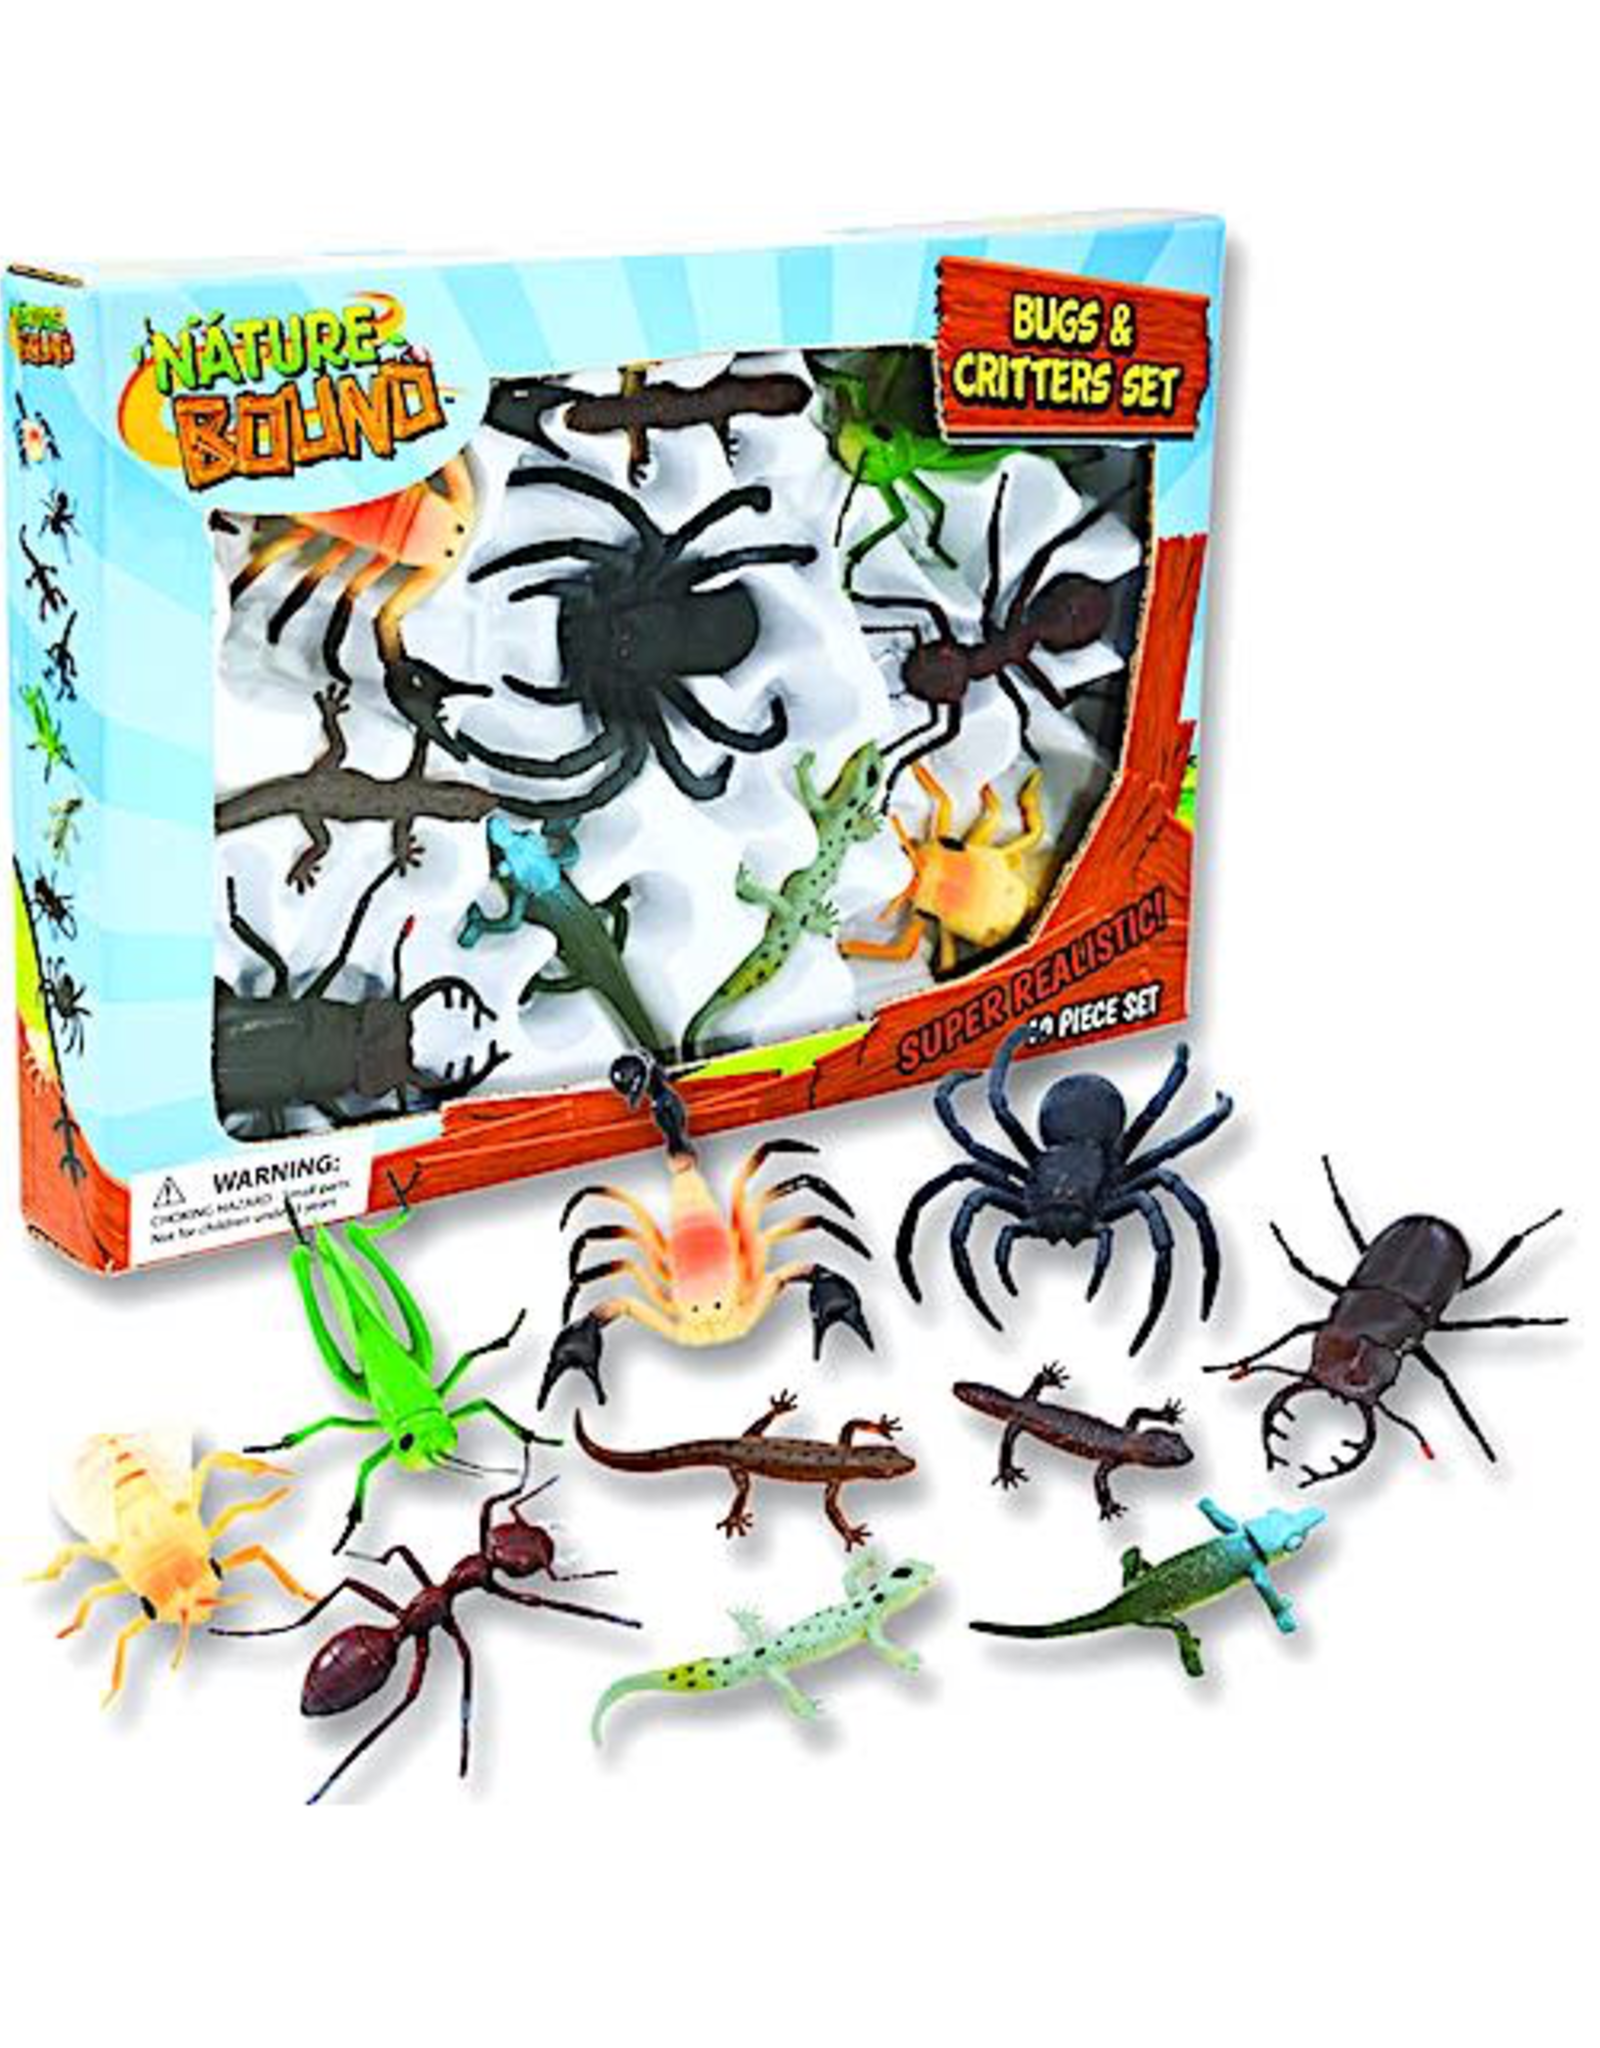 Bug & Critter Set